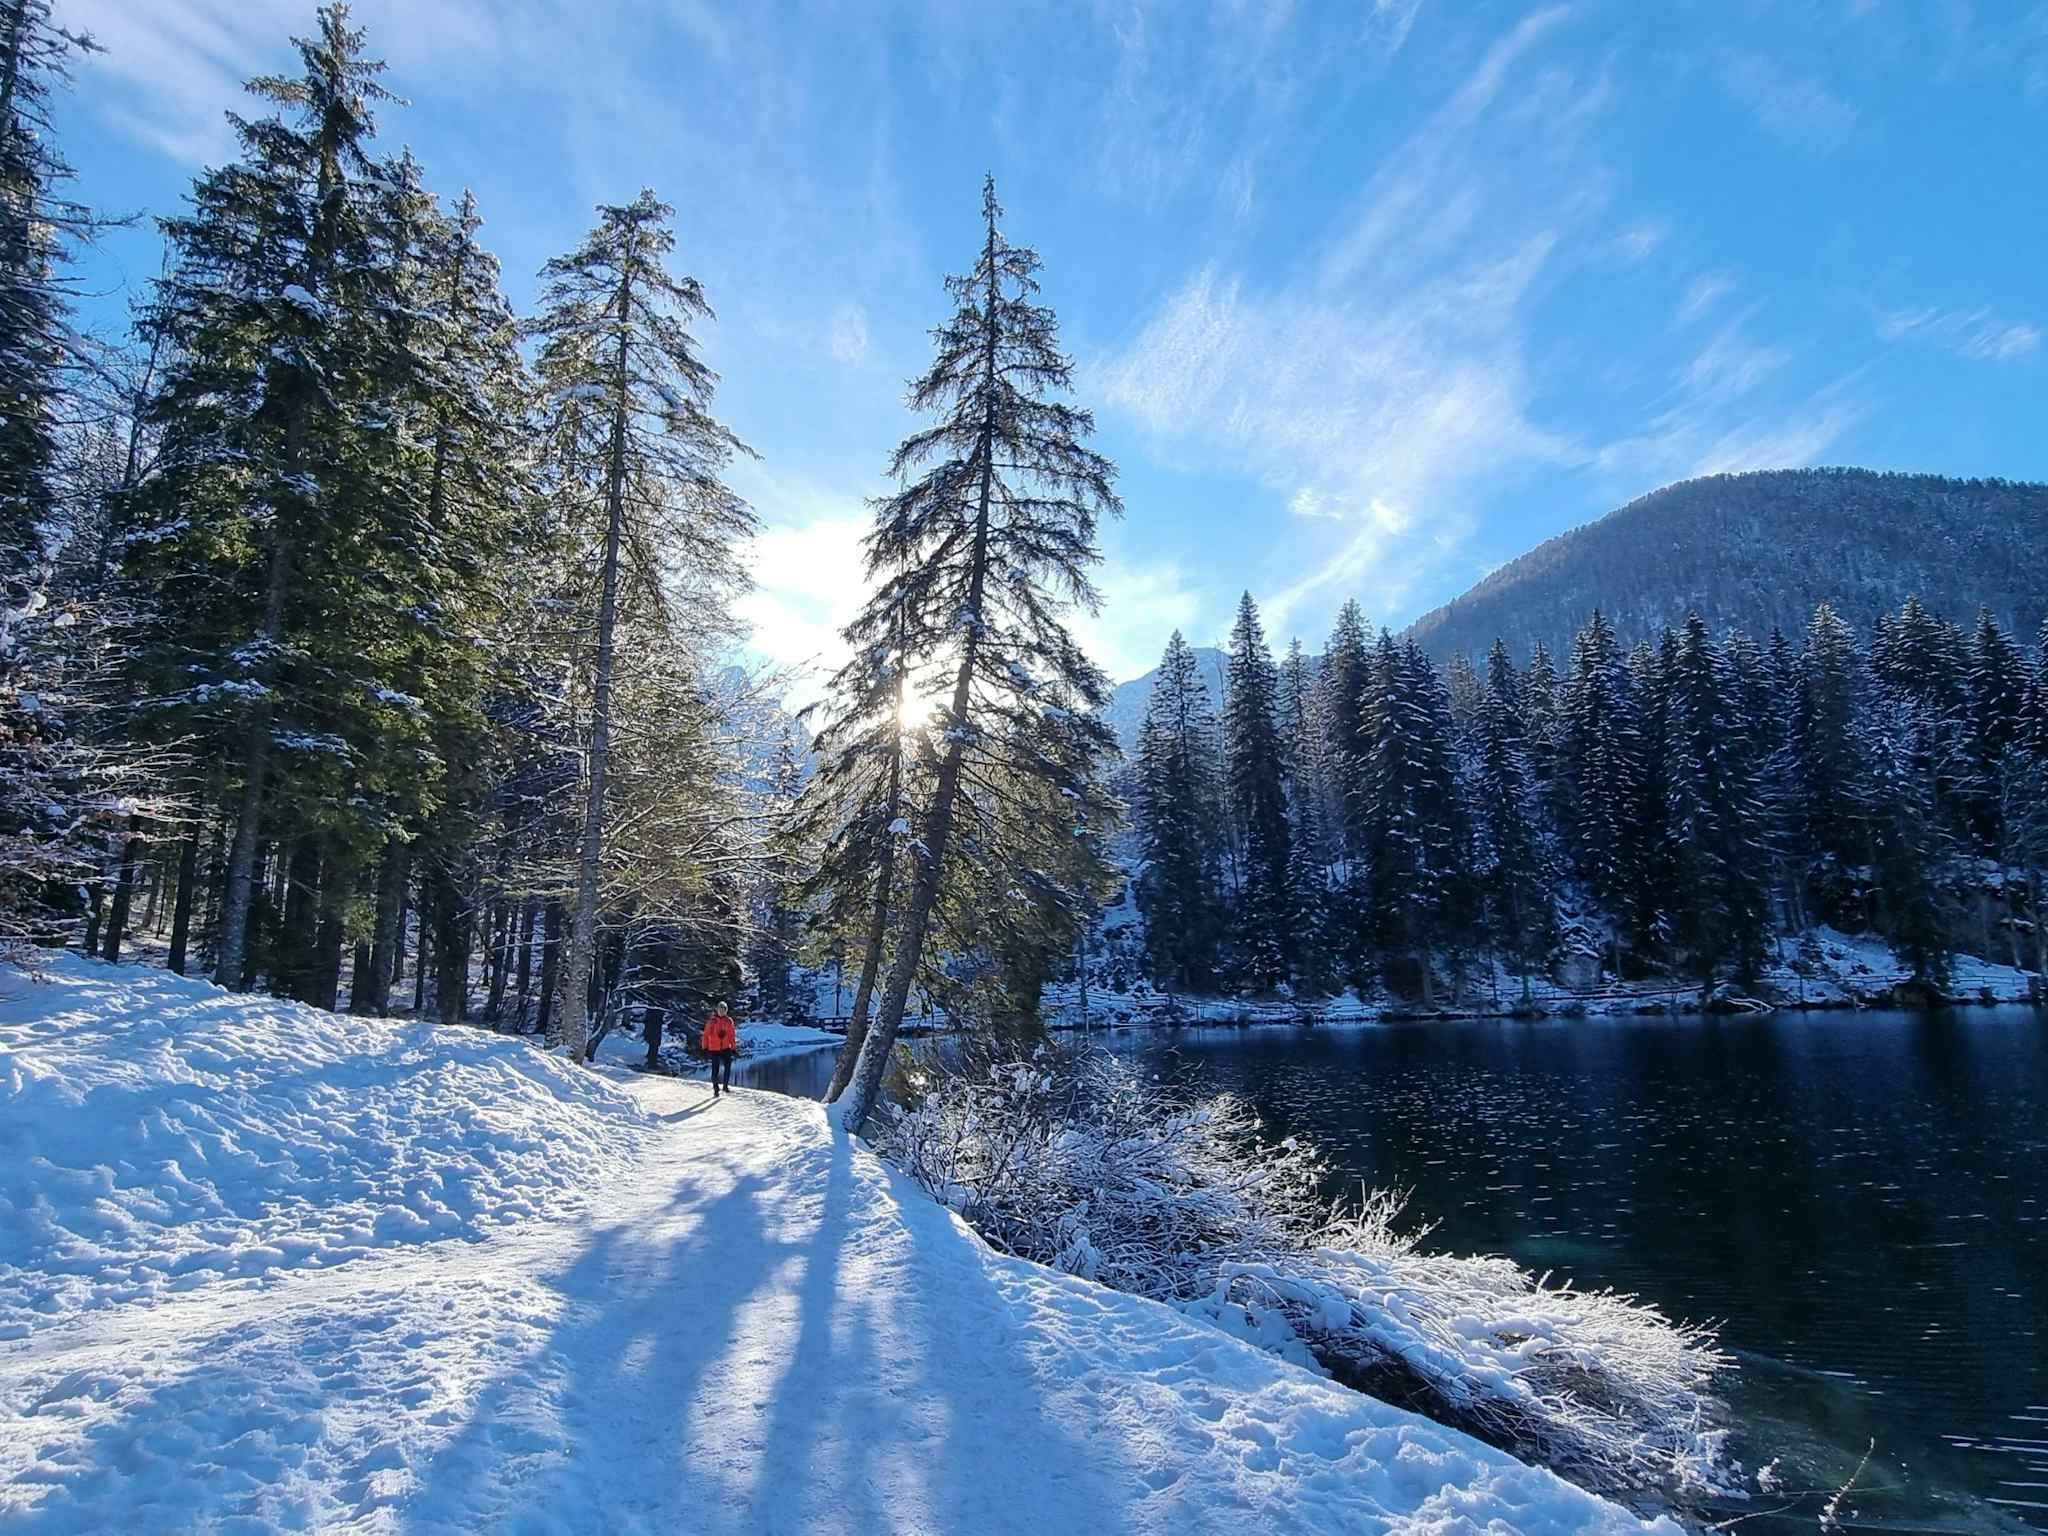 Fusine Lake in the snow, Julian Alps, Italy